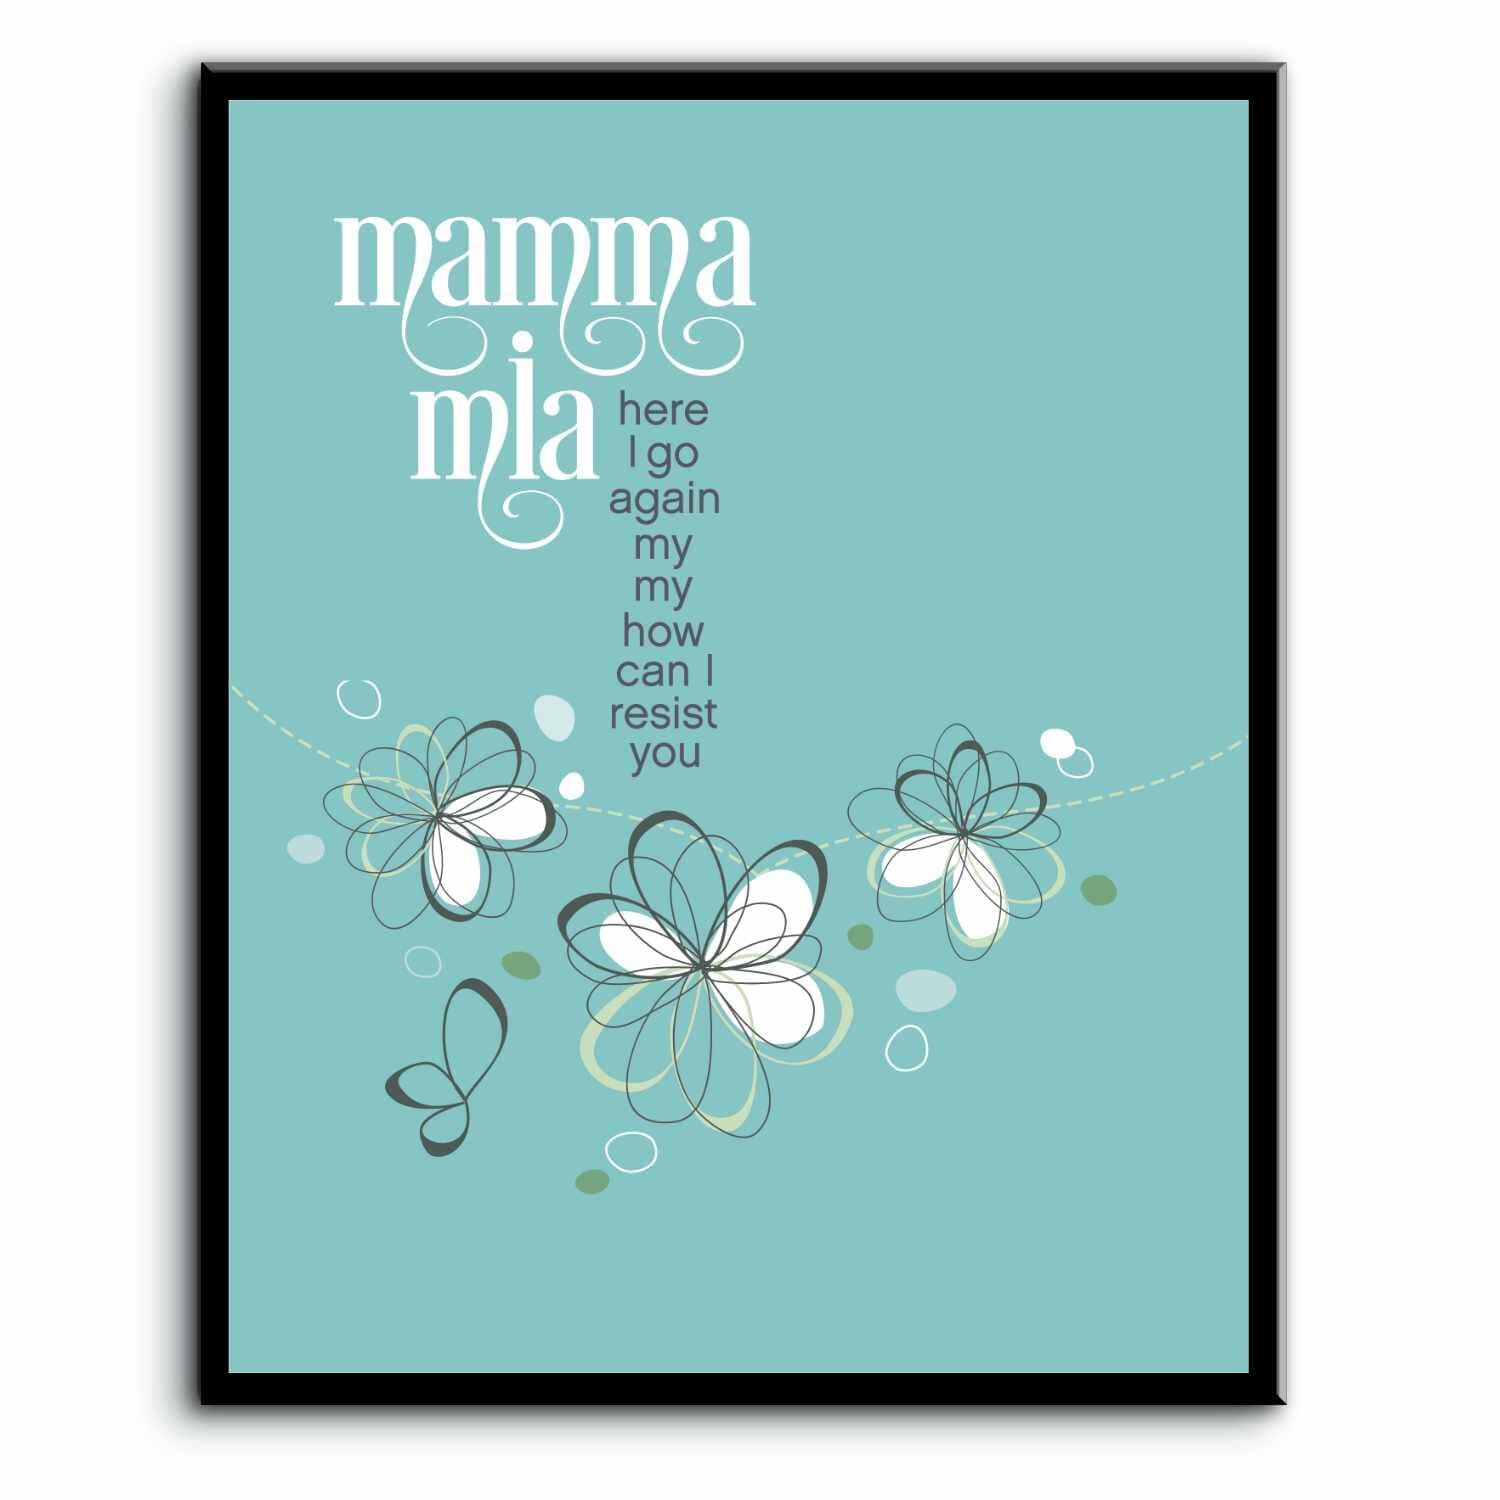 Mamma Mia by ABBA - Song Lyric Pop Music Wall Art Print Song Lyrics Art Song Lyrics Art 8x10 Plaque Mount 